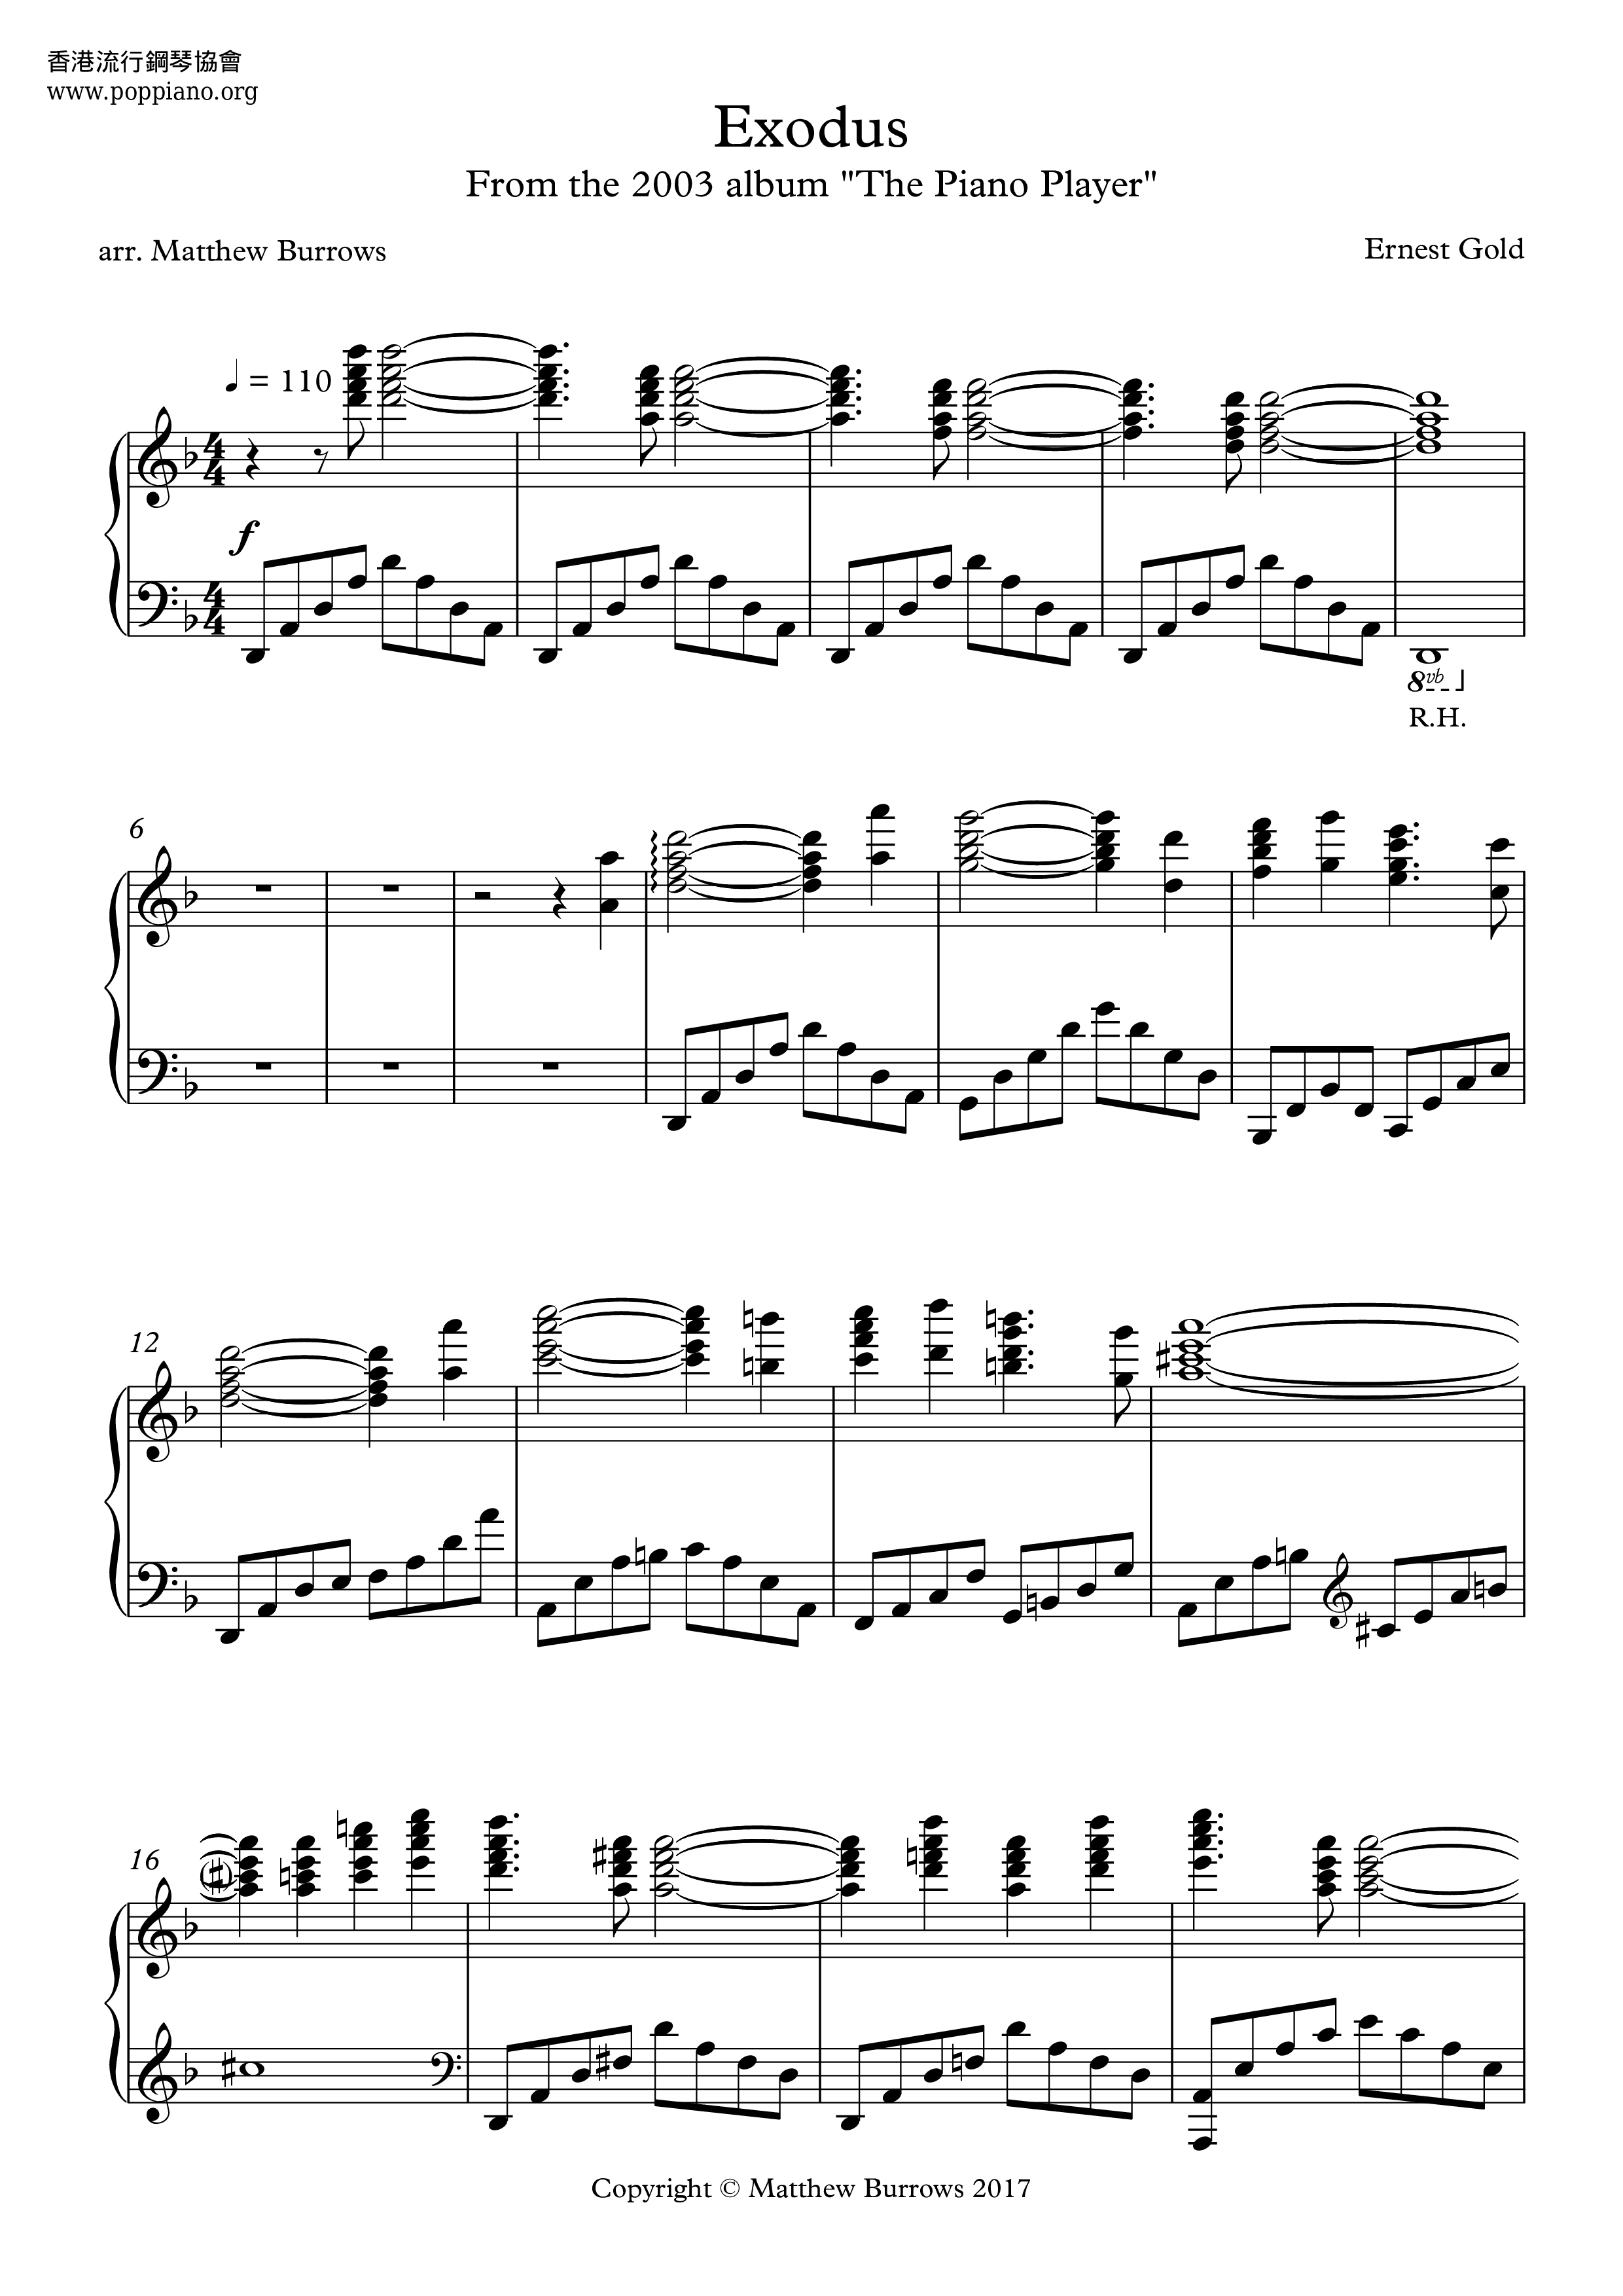 The Piano Player - Exodus Score